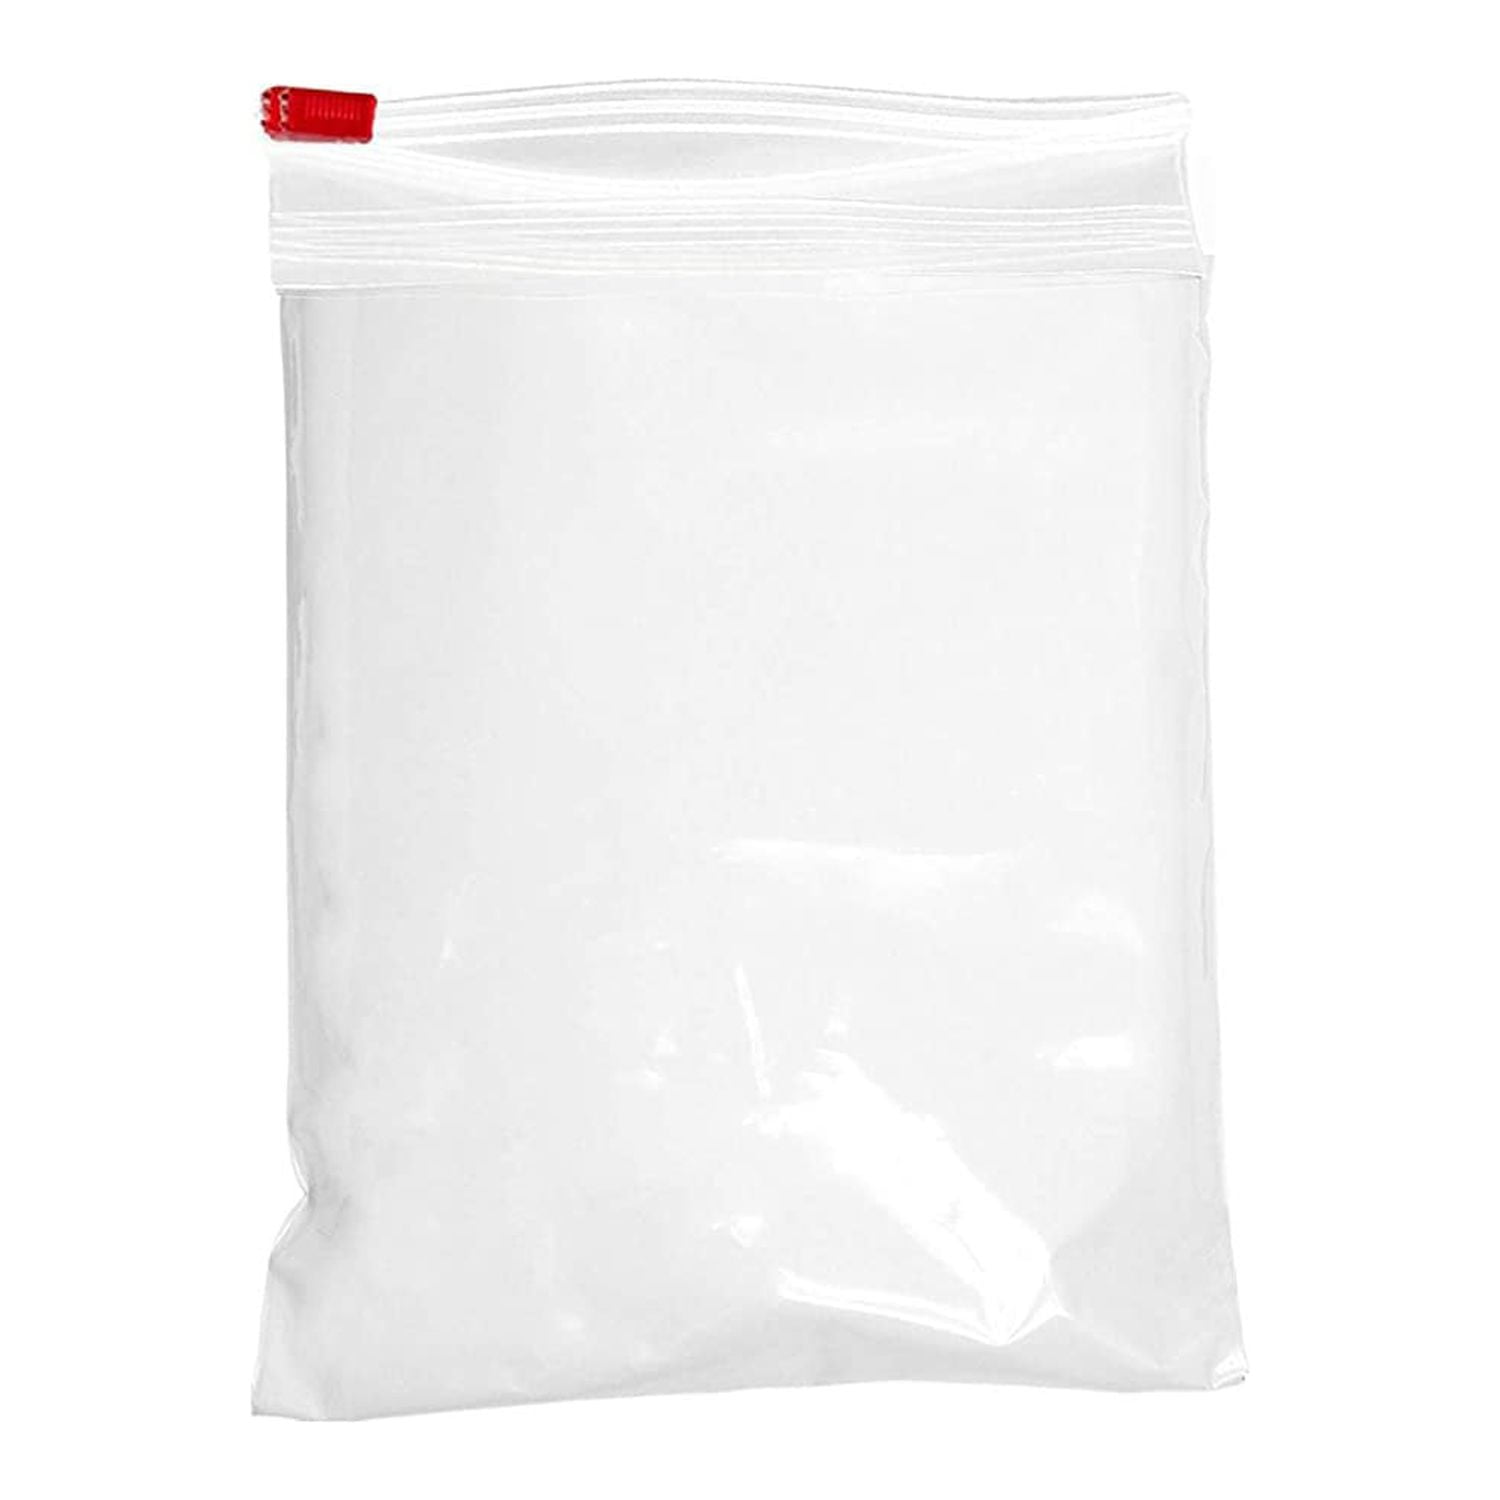 Ziploc® Big Bags XXL Storage Bags - 3 Count at Menards®